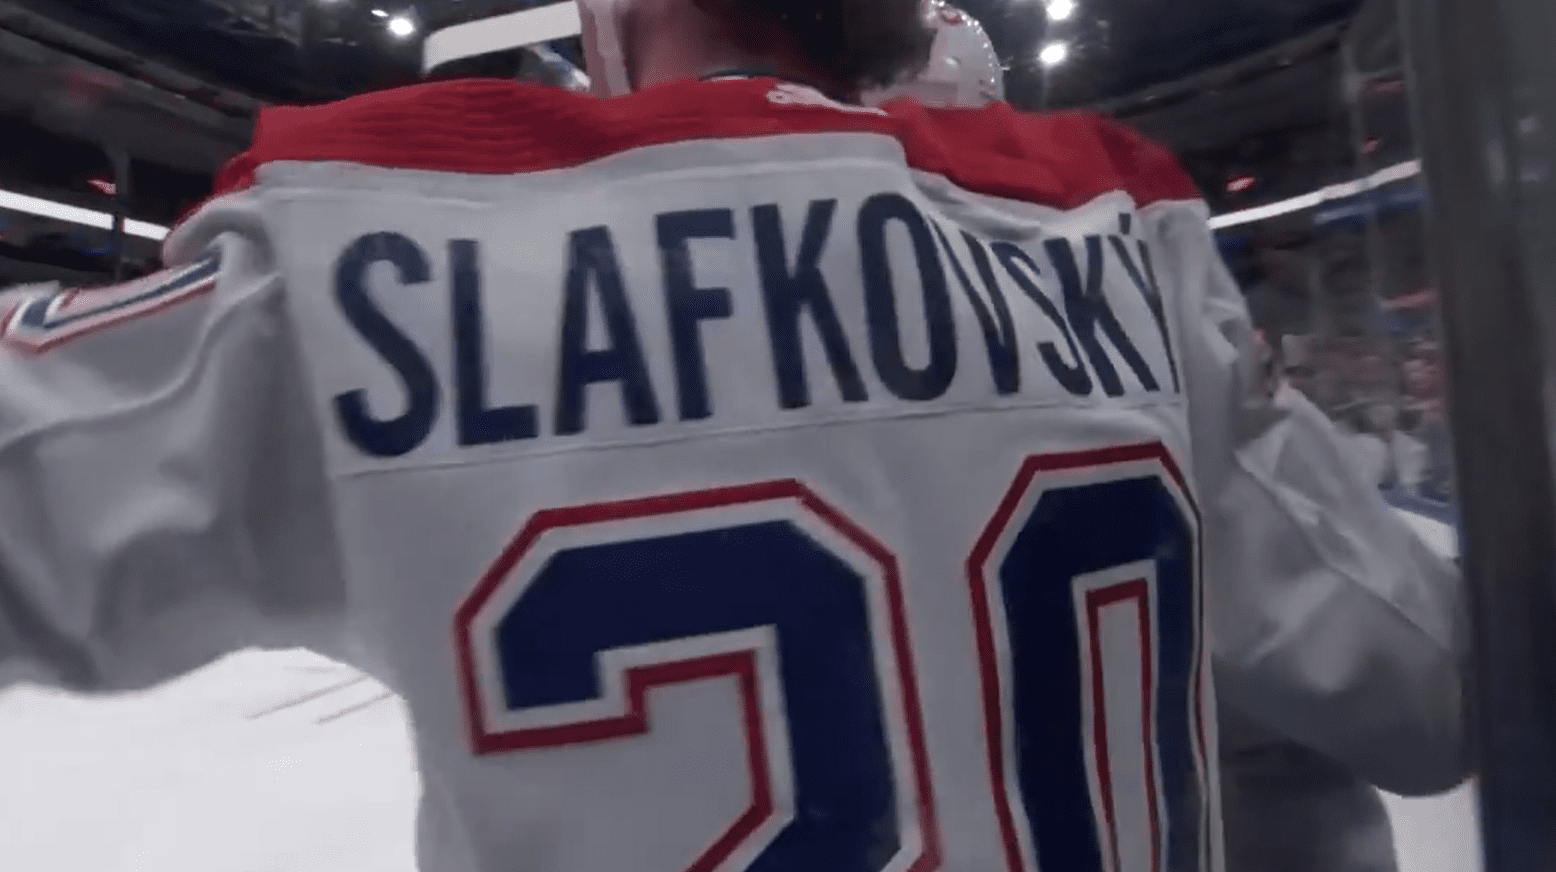 Montreal Canadiens Slafkovsky